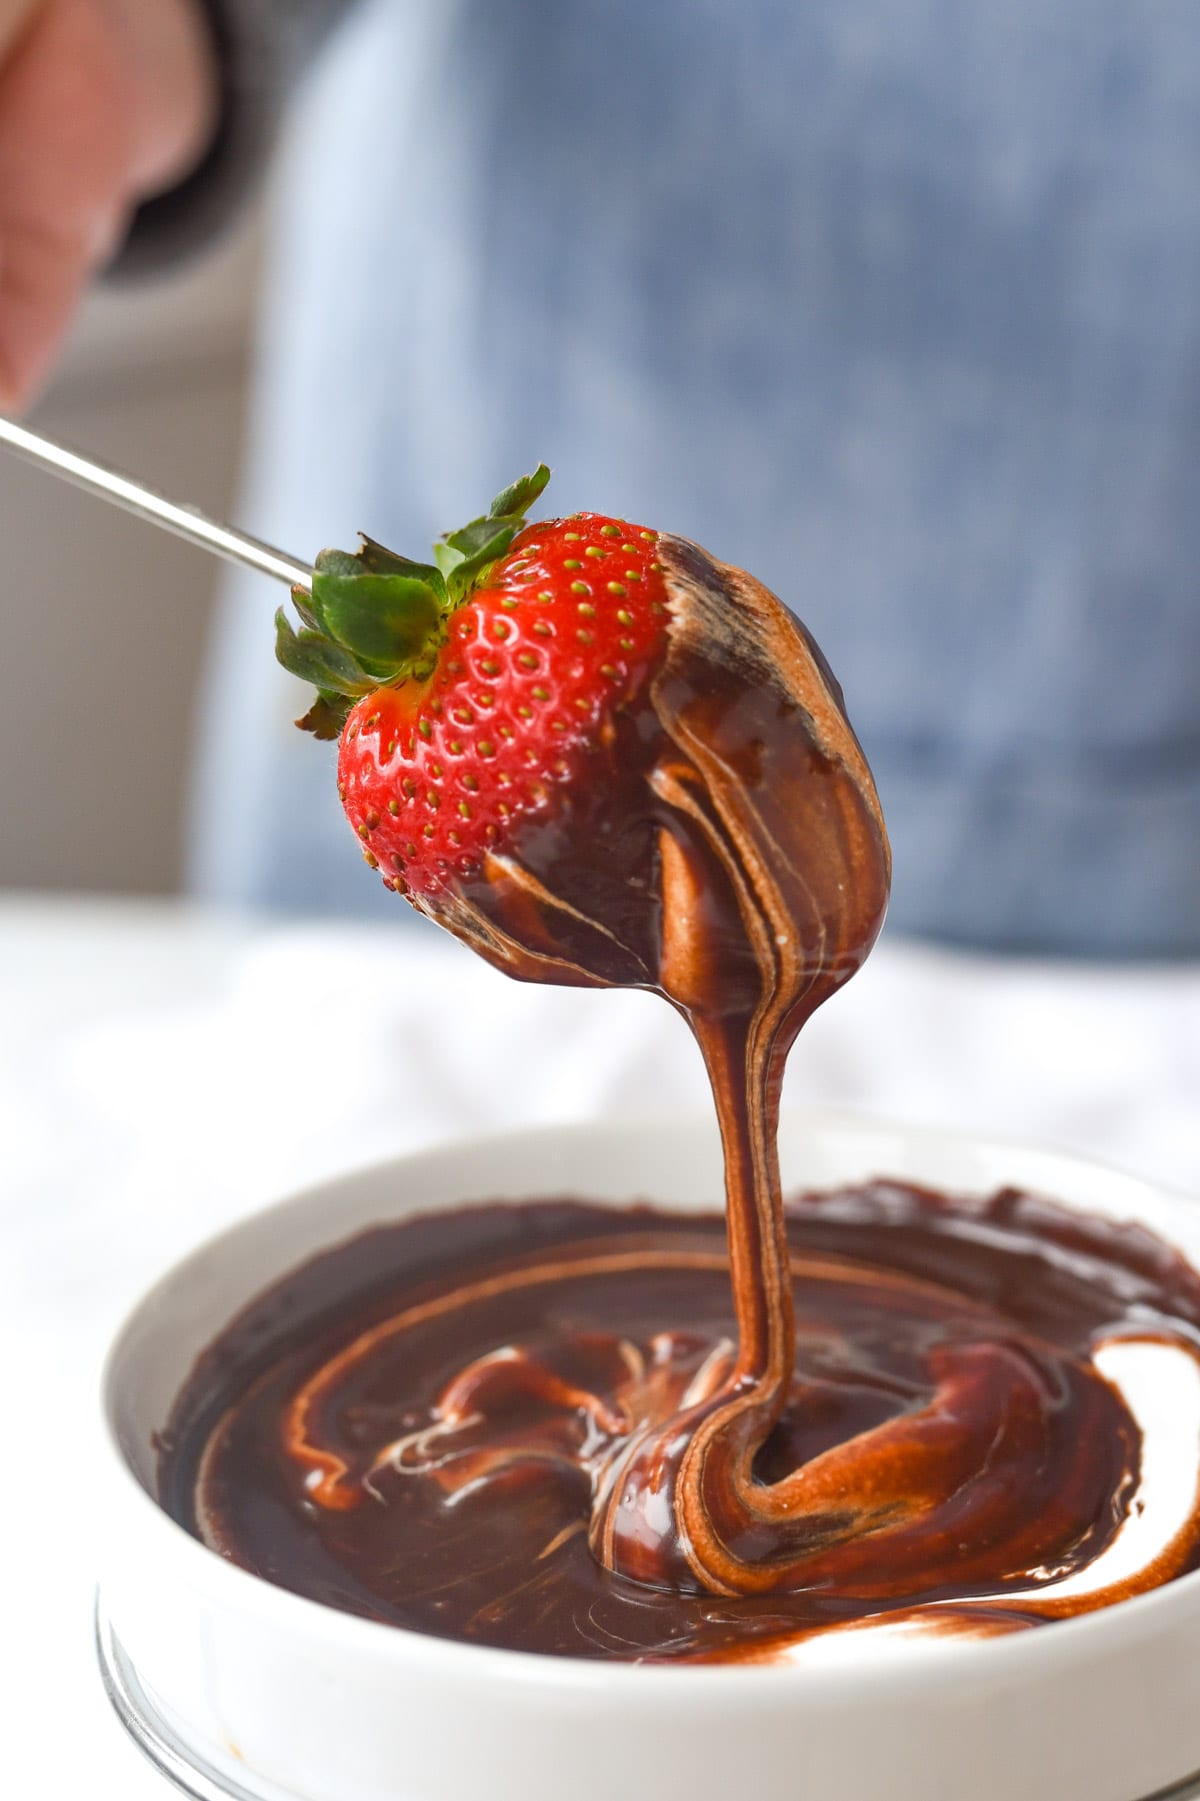 Strawberry dipping into chocolate fondue